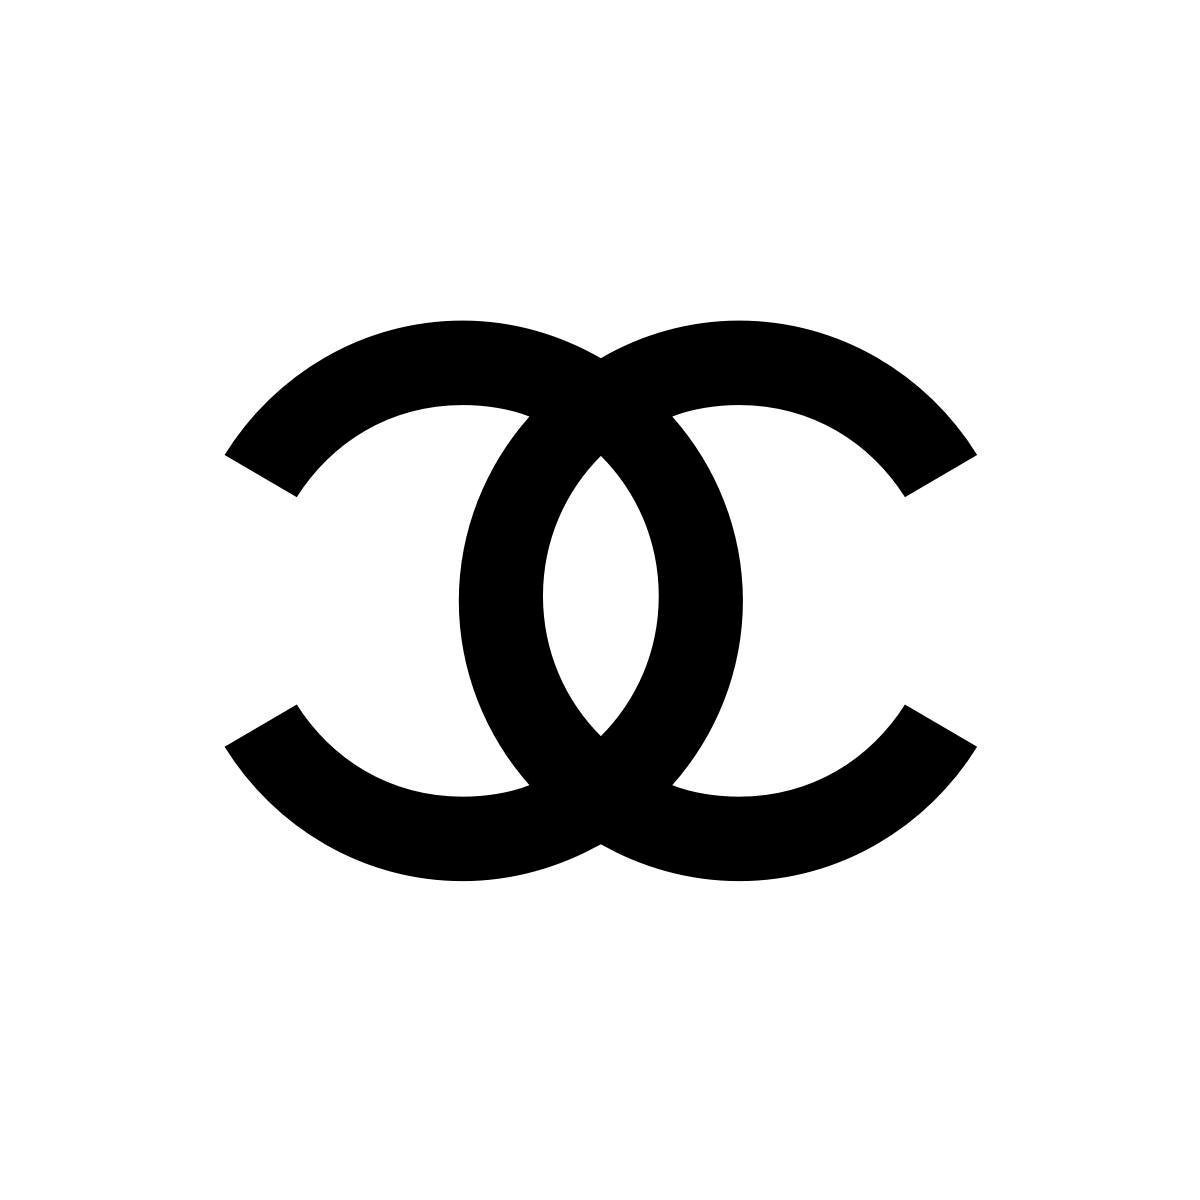 CHANEL BOUTIQUE HAMBURG in Hamburg - Logo